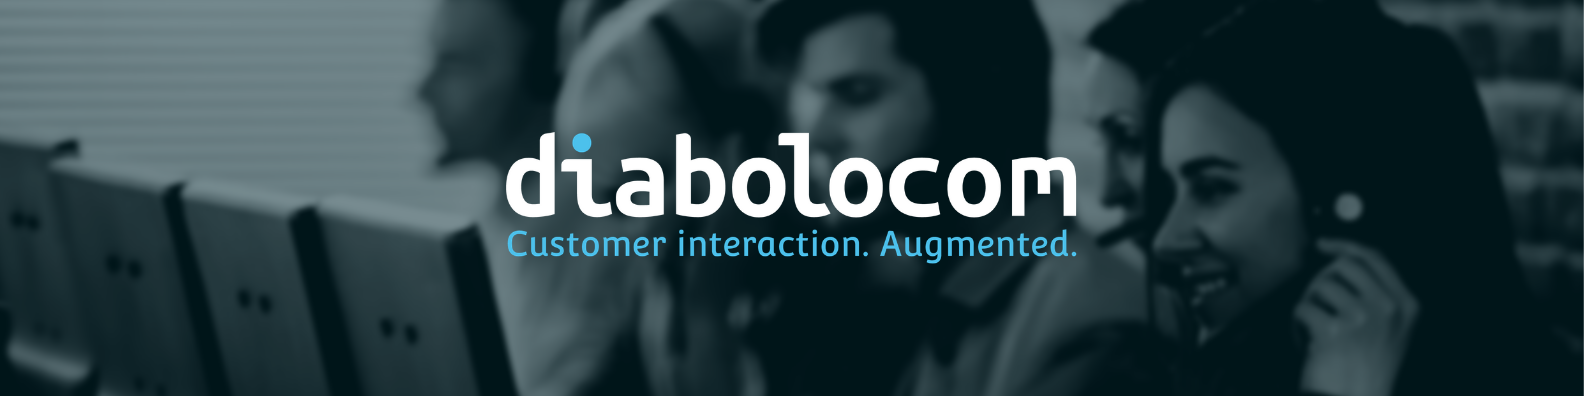 Review Diabolocom: 100% cloud-based contact center solution. - Appvizer